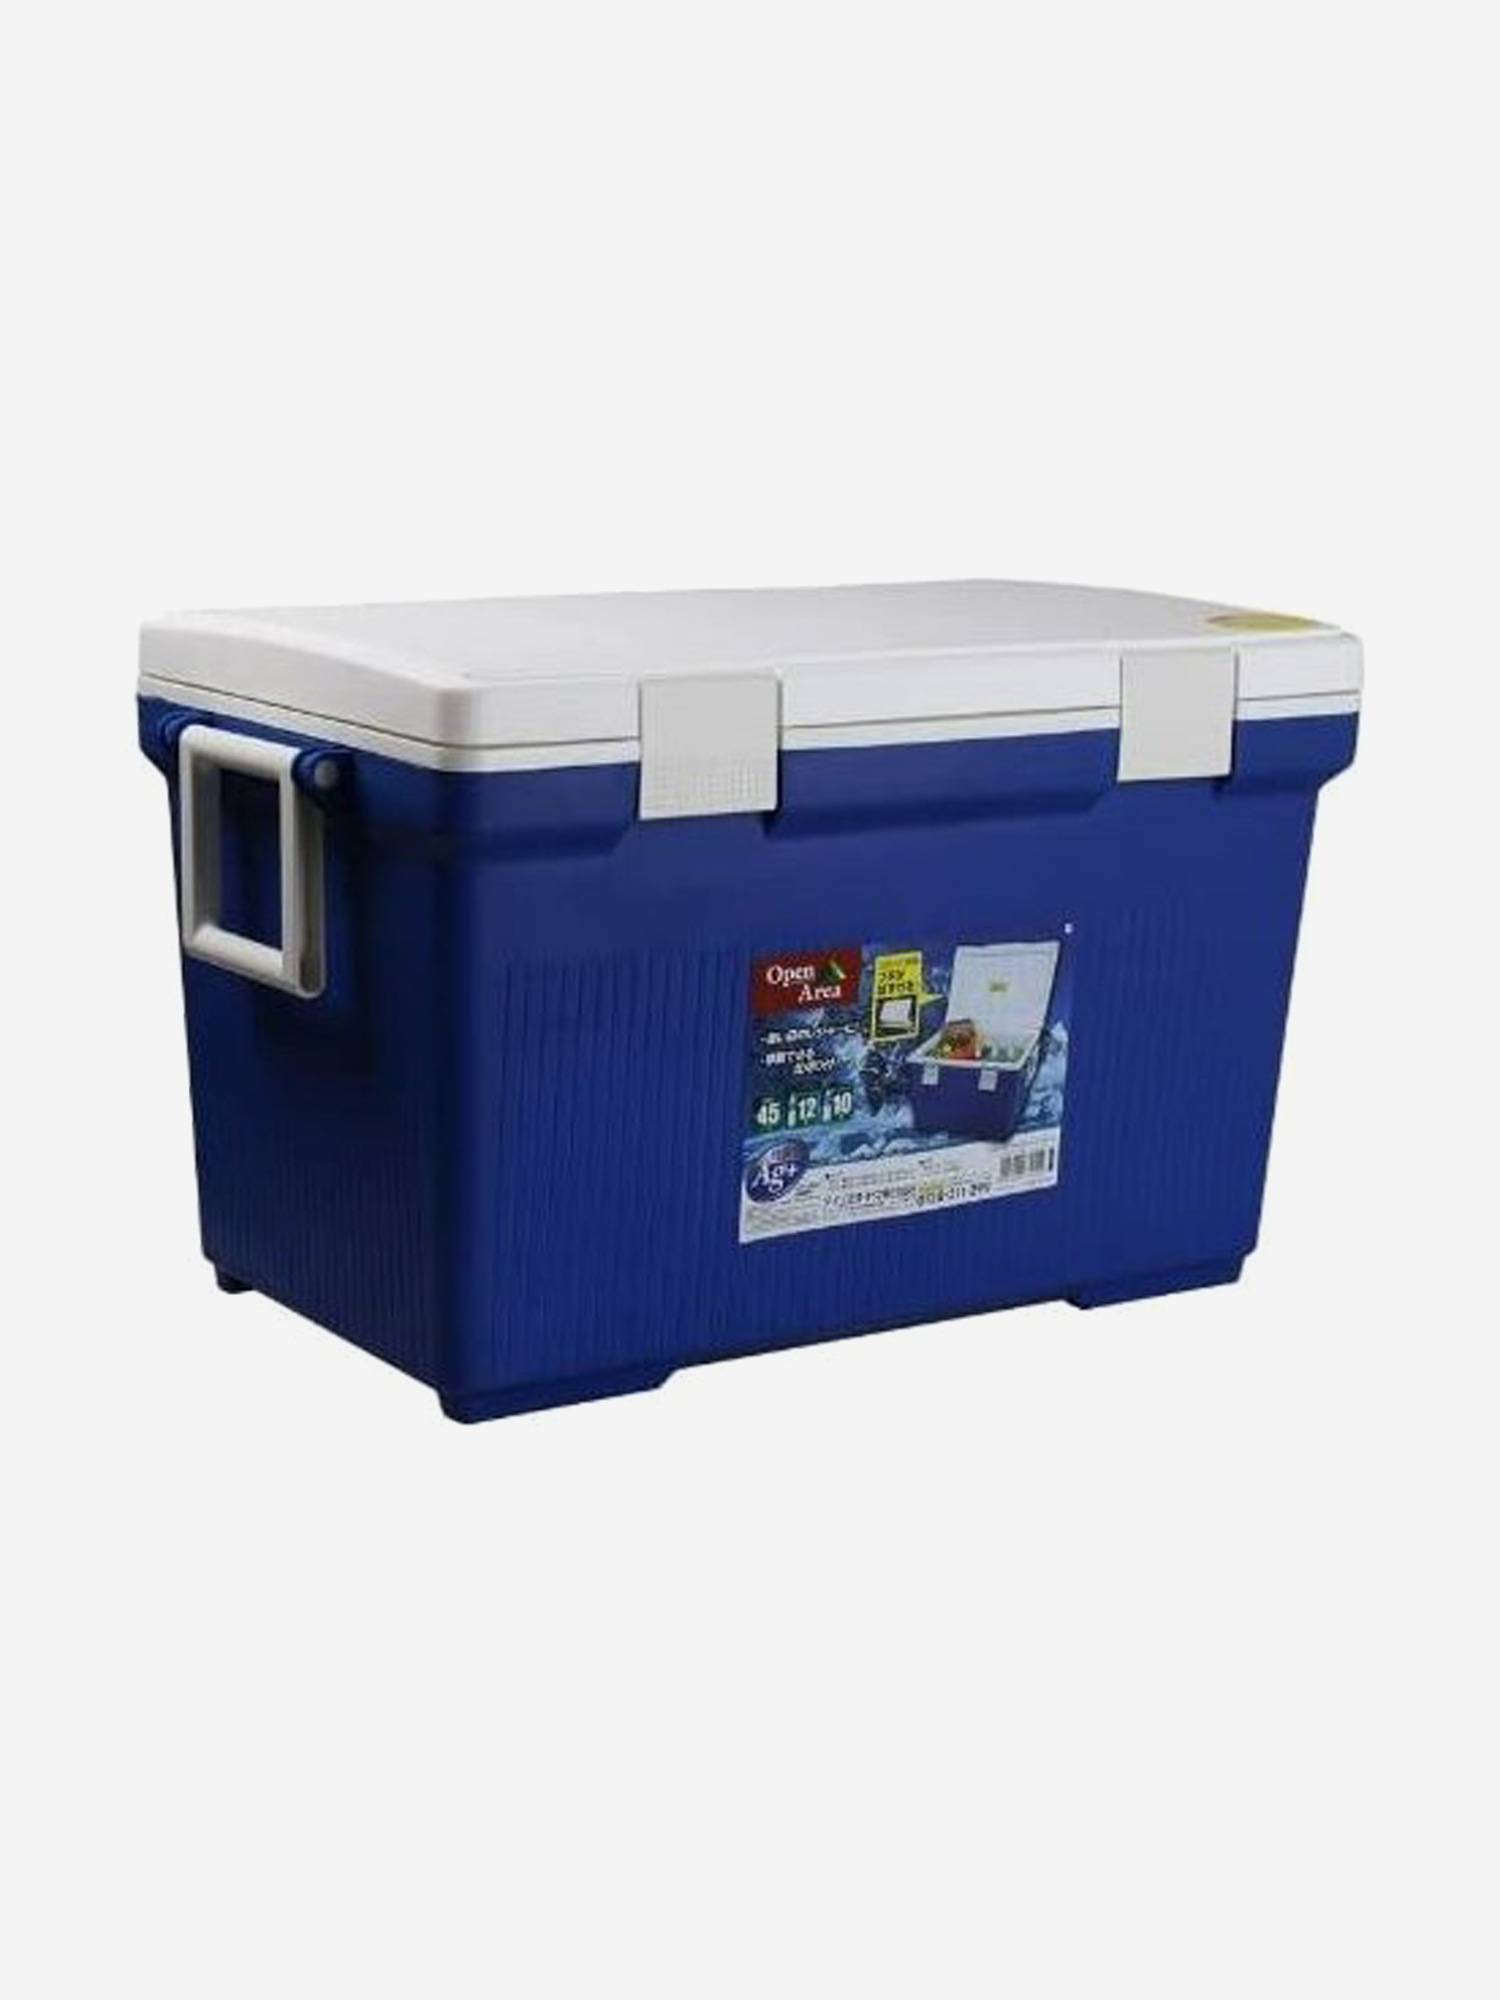 Термобокс IRIS OHYAMA Cooler Box CL-45, 45 литров, синий/белый, Синий термобокс iris ohyama hugel vacuum cooler box tc 40 40 литров